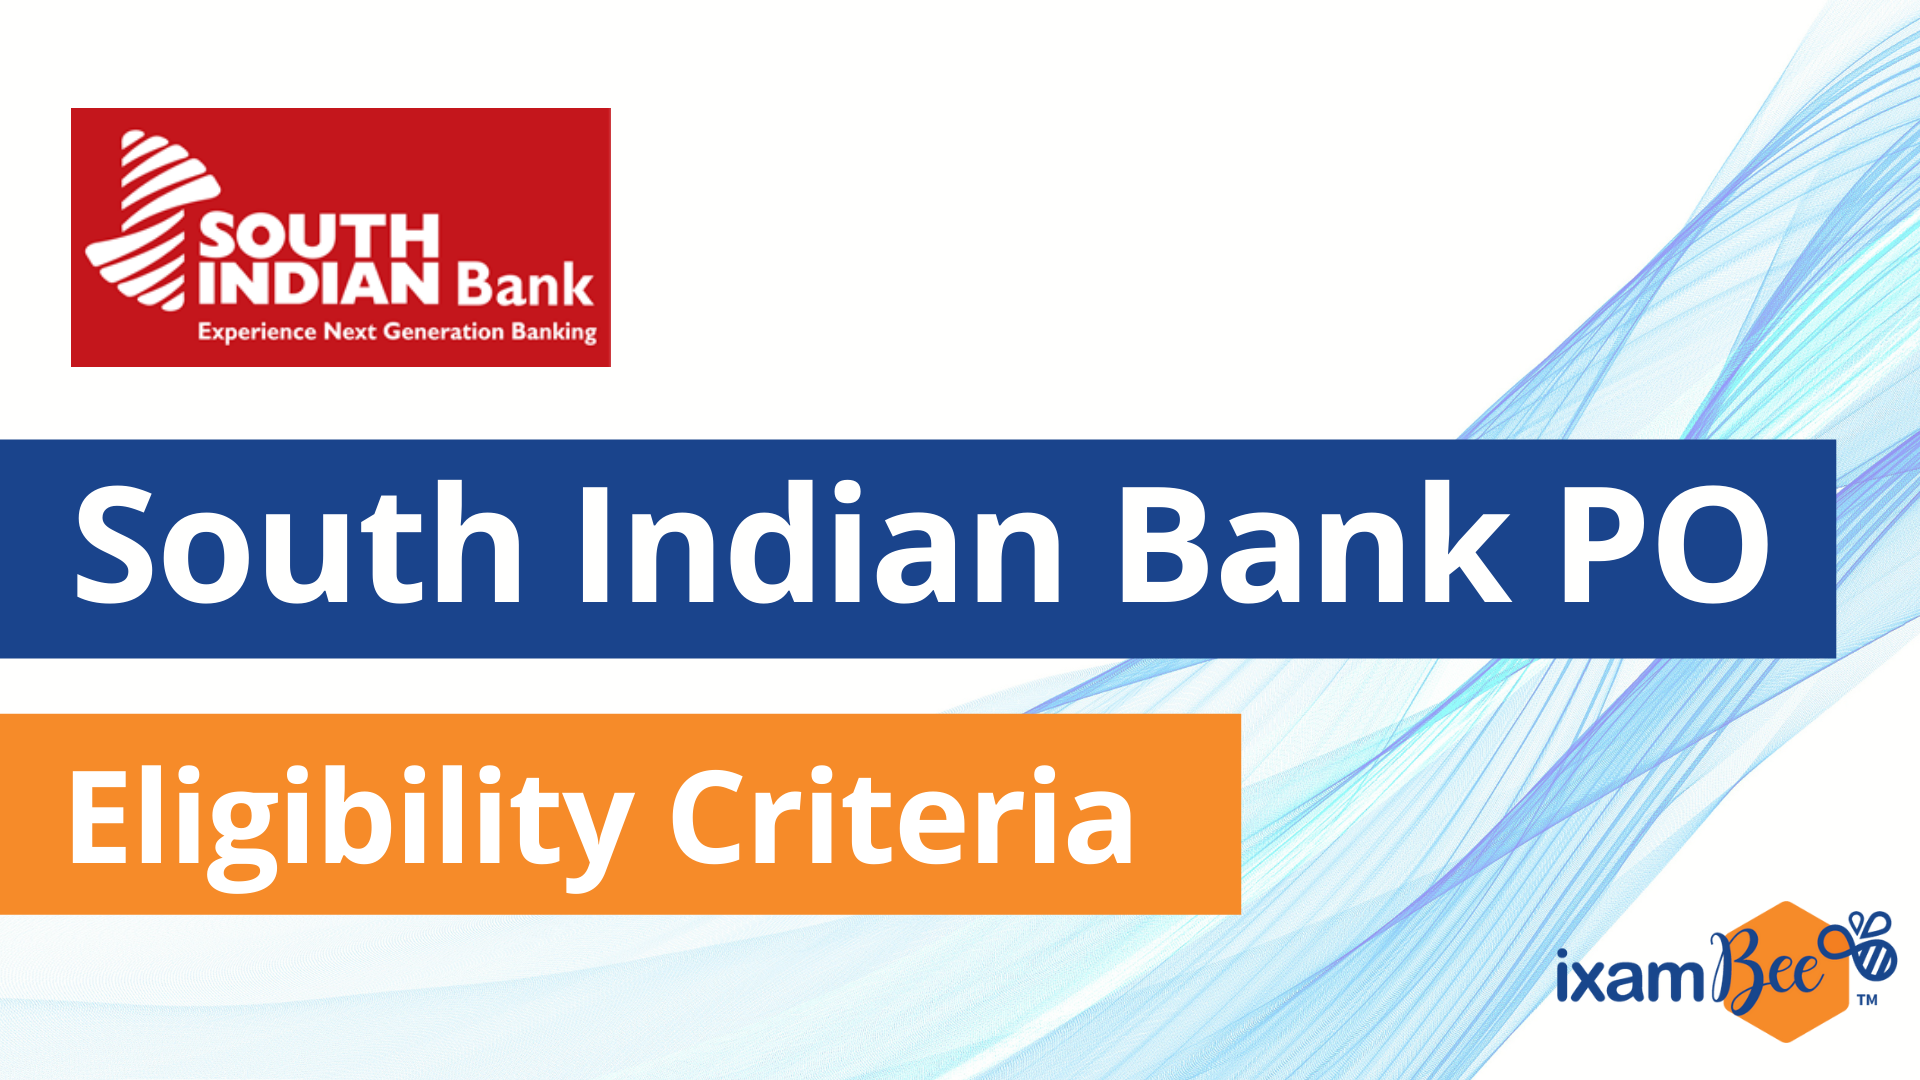 South Indian Bank PO Eligibility Criteria